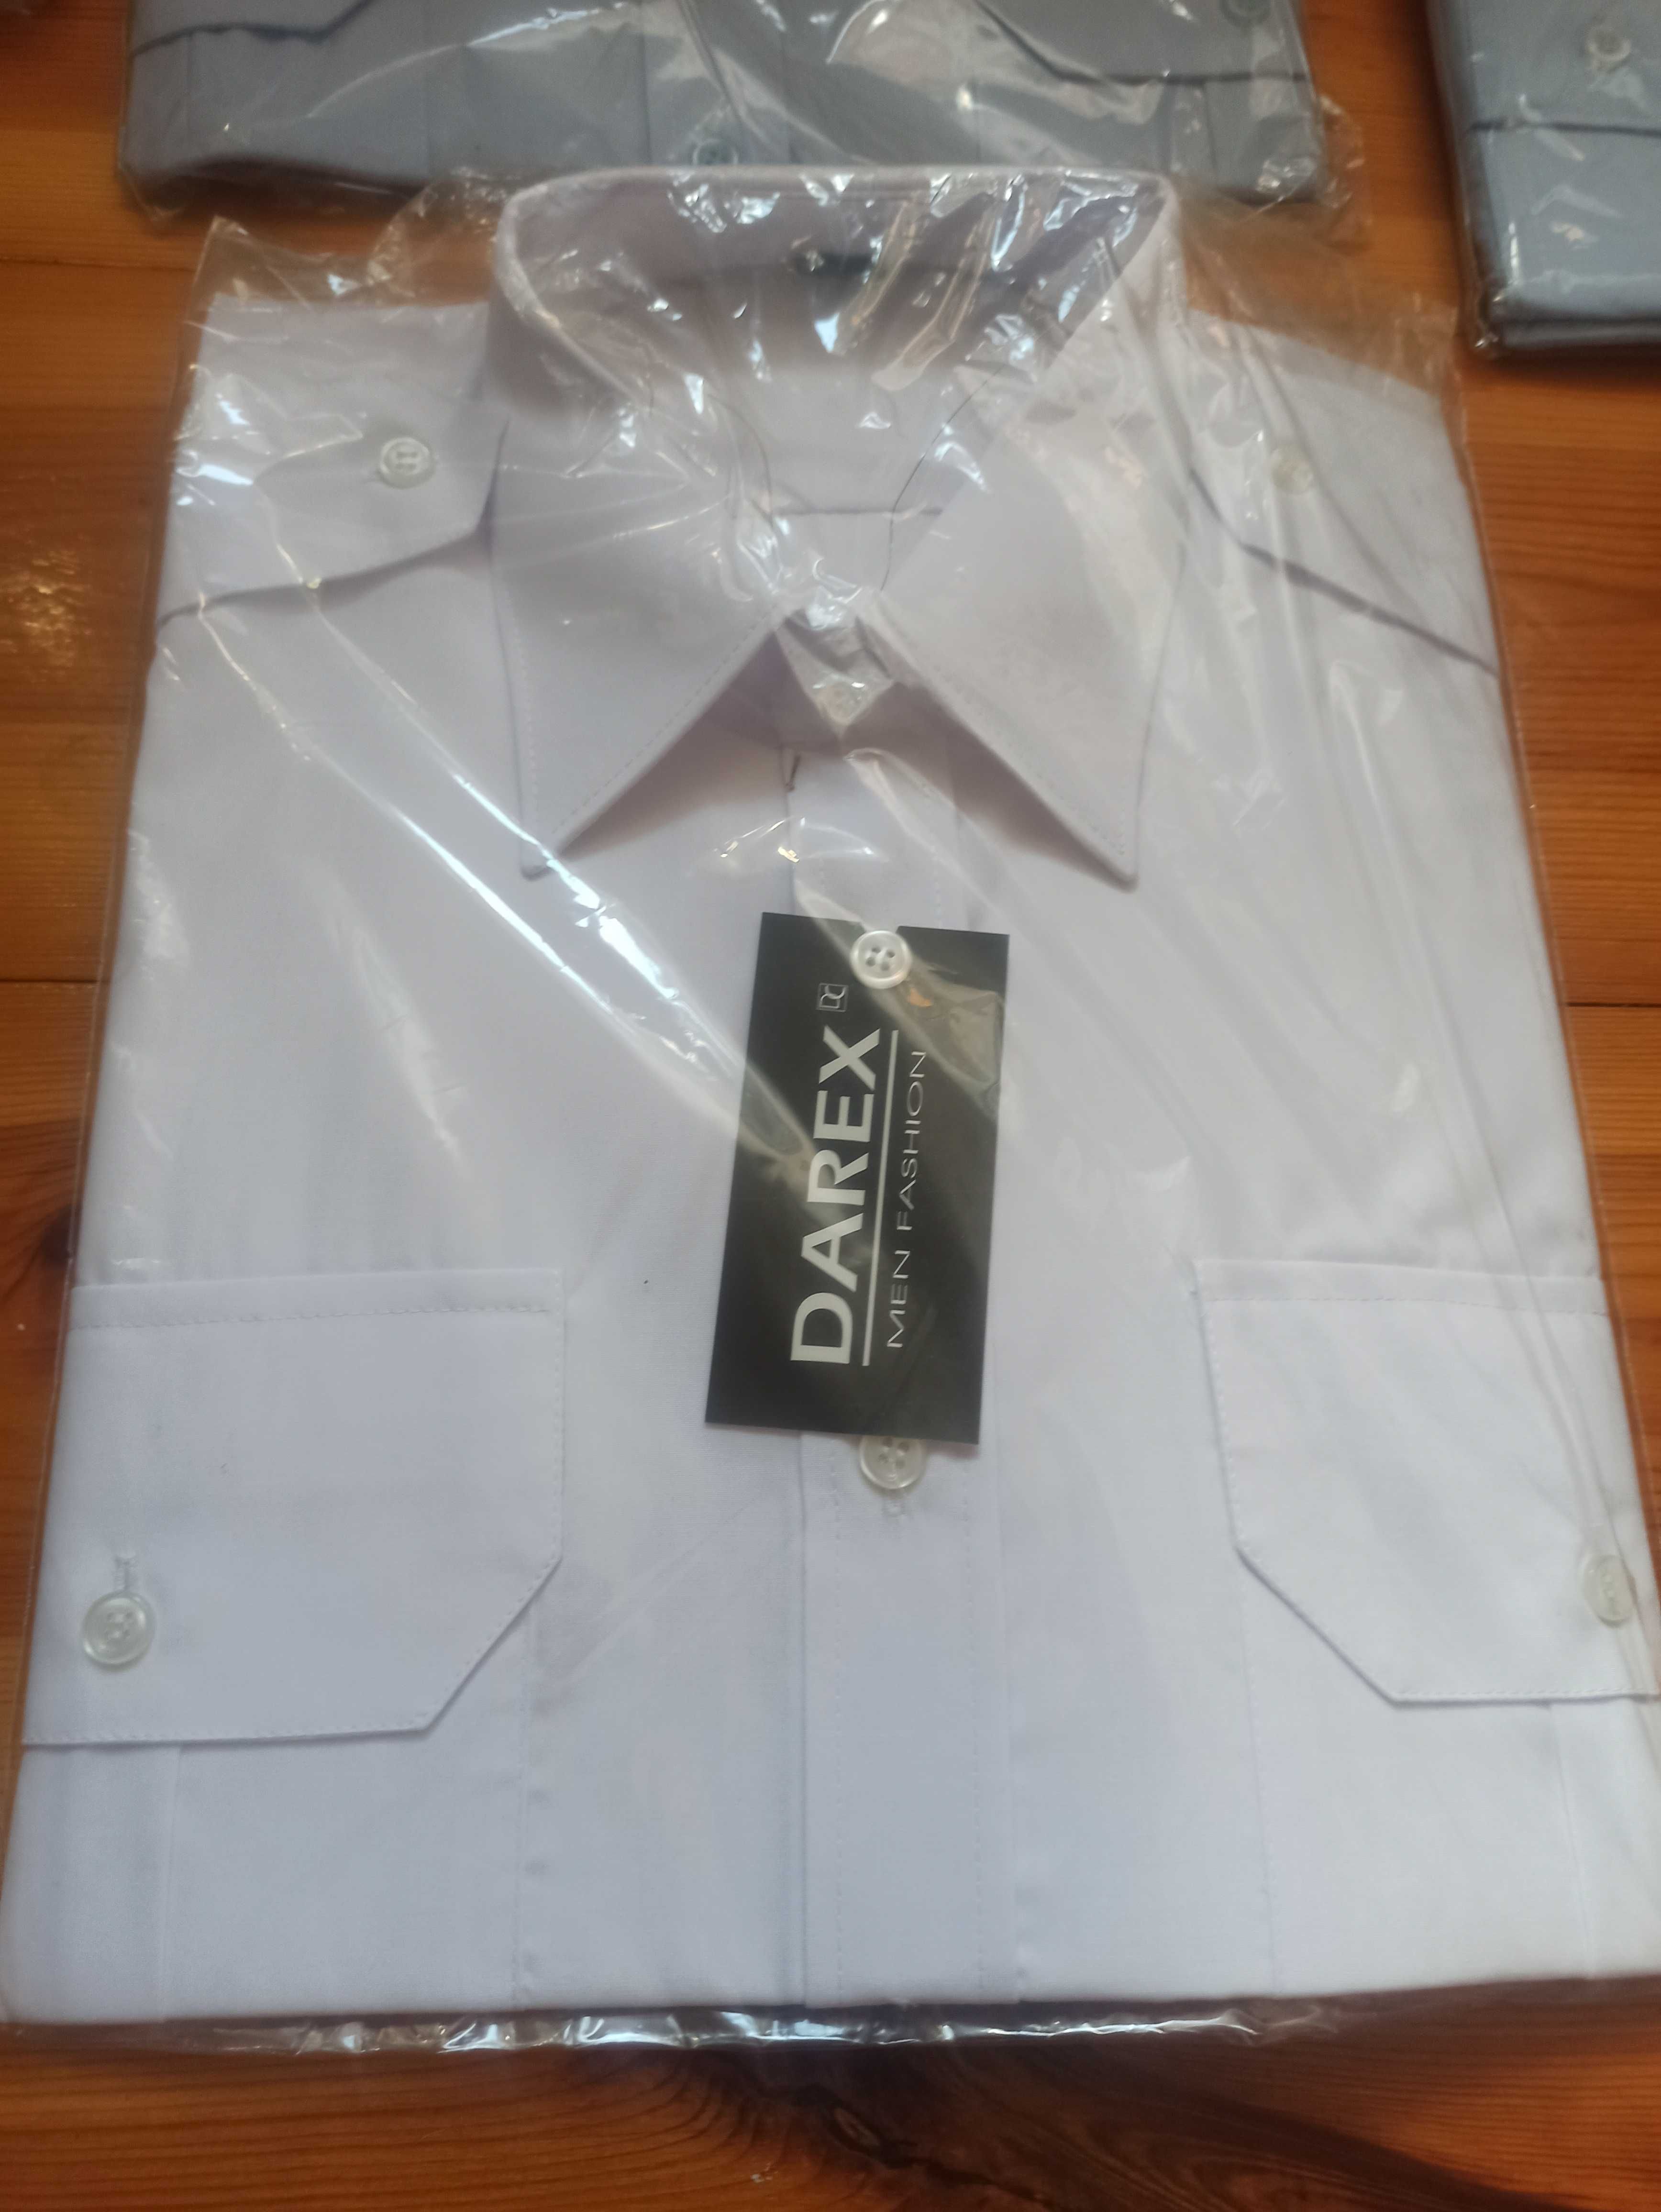 Koszula męska 40 - DAREX - POLSKI producent  NOWE